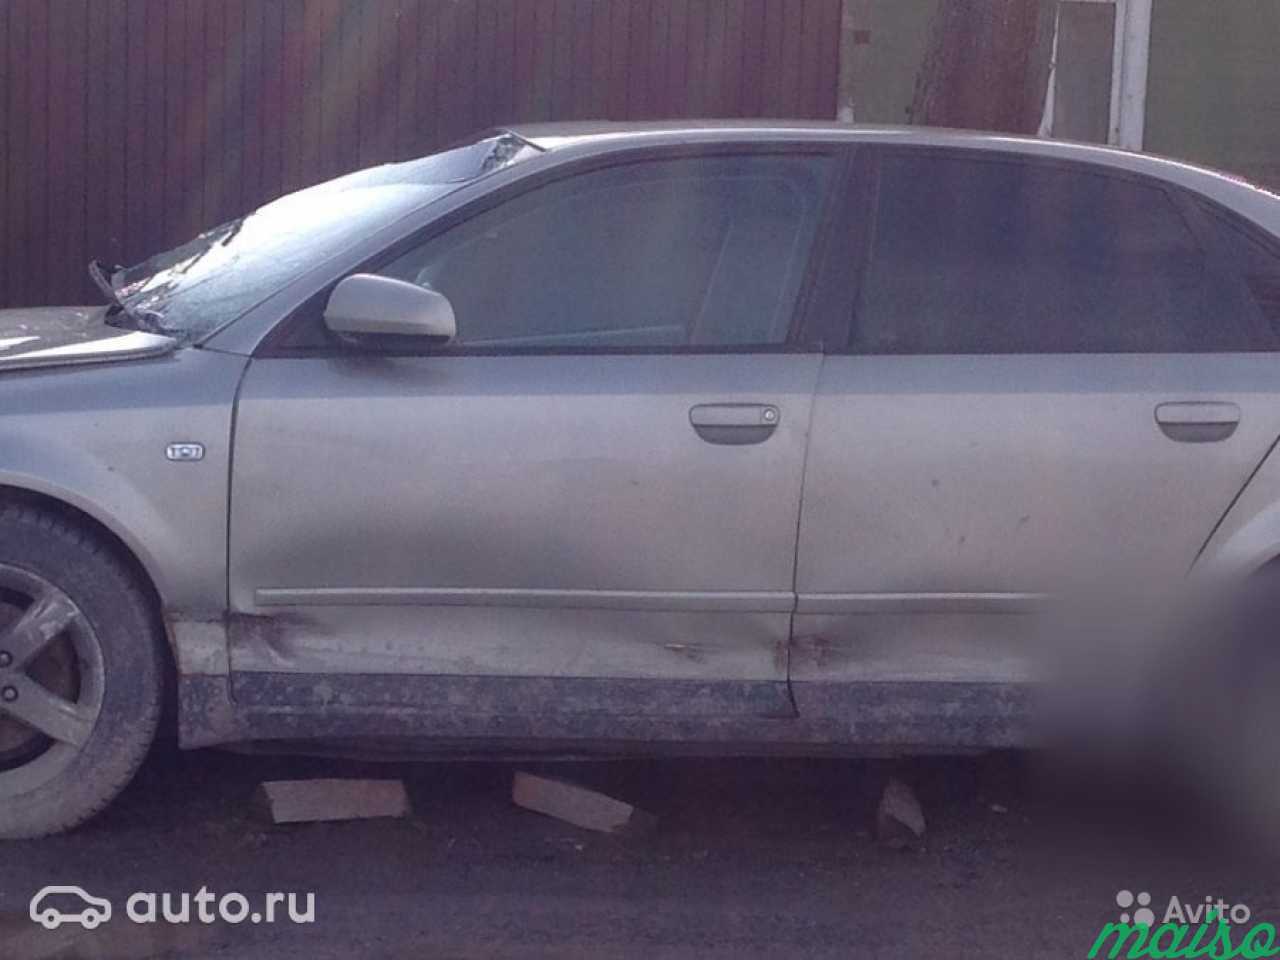 Audi a4 b6 b7 опускные стекла в Санкт-Петербурге. Фото 1